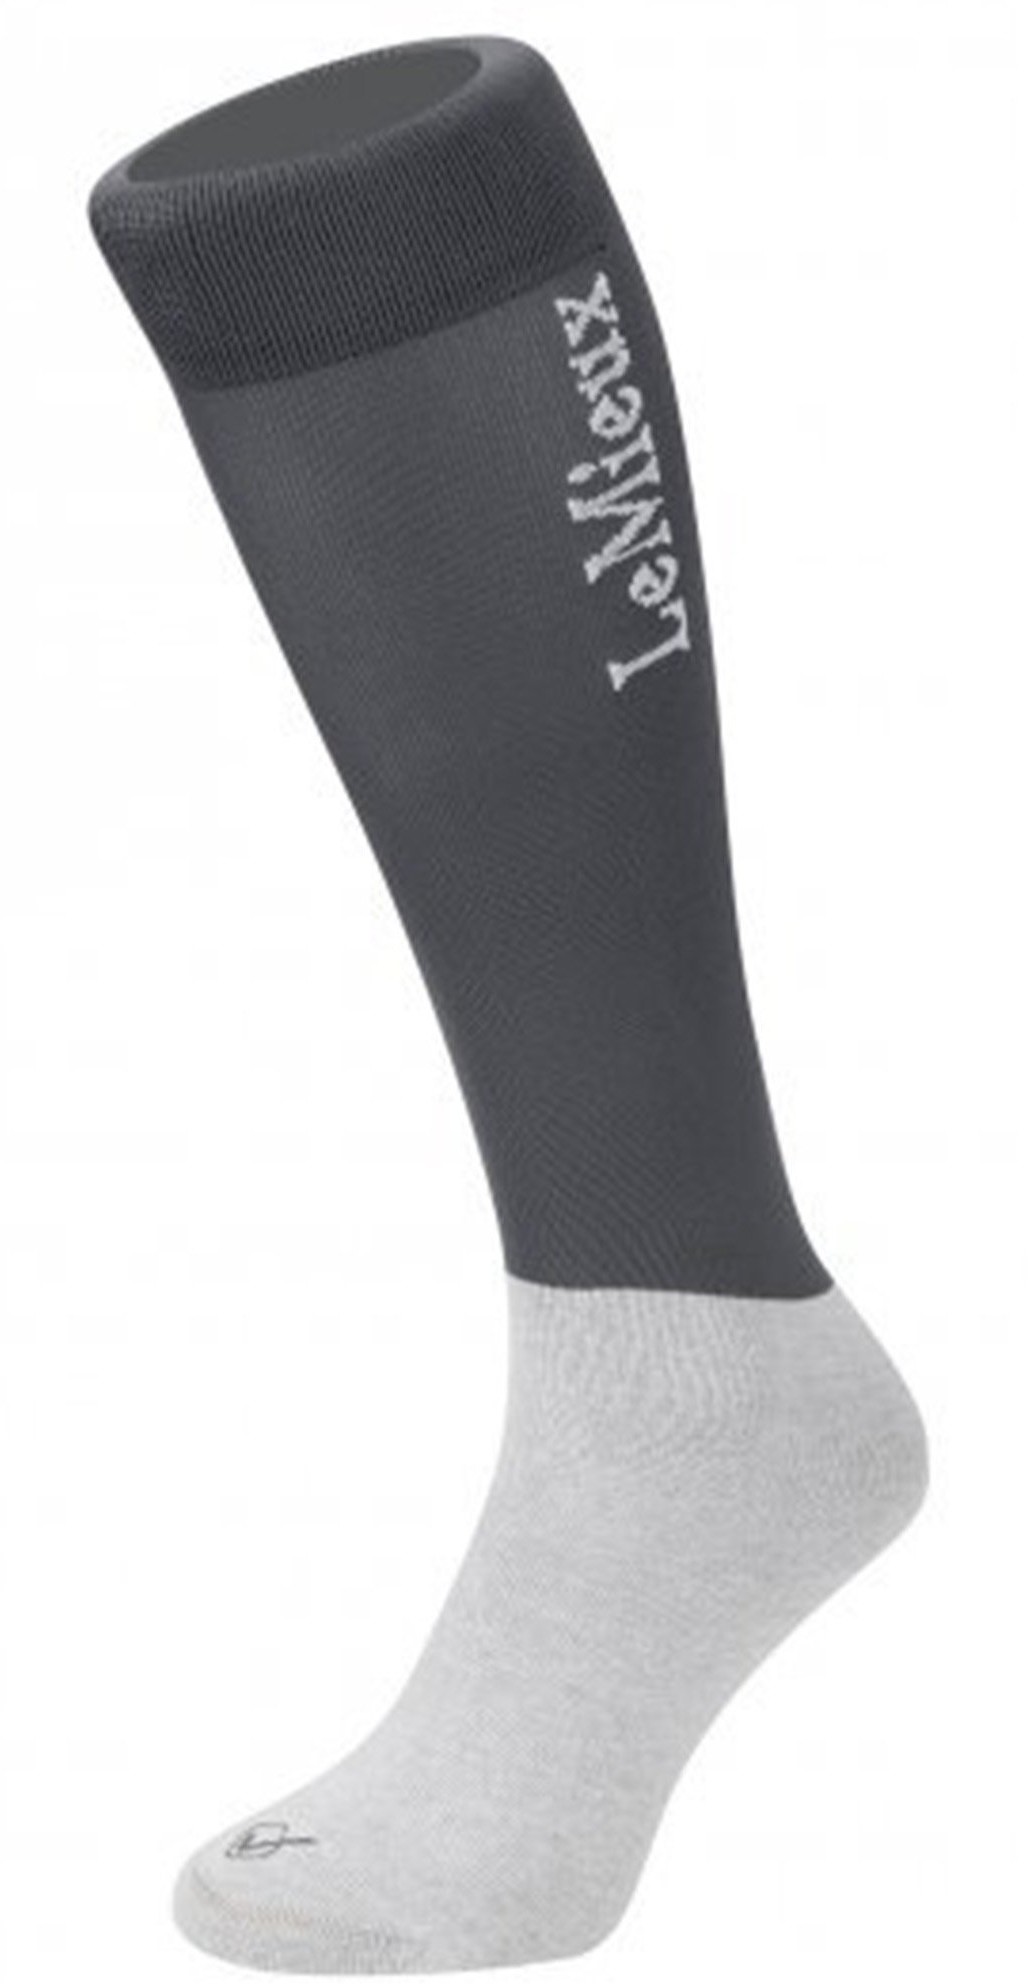 LeMieux Competition Socks - Townfields Saddlers